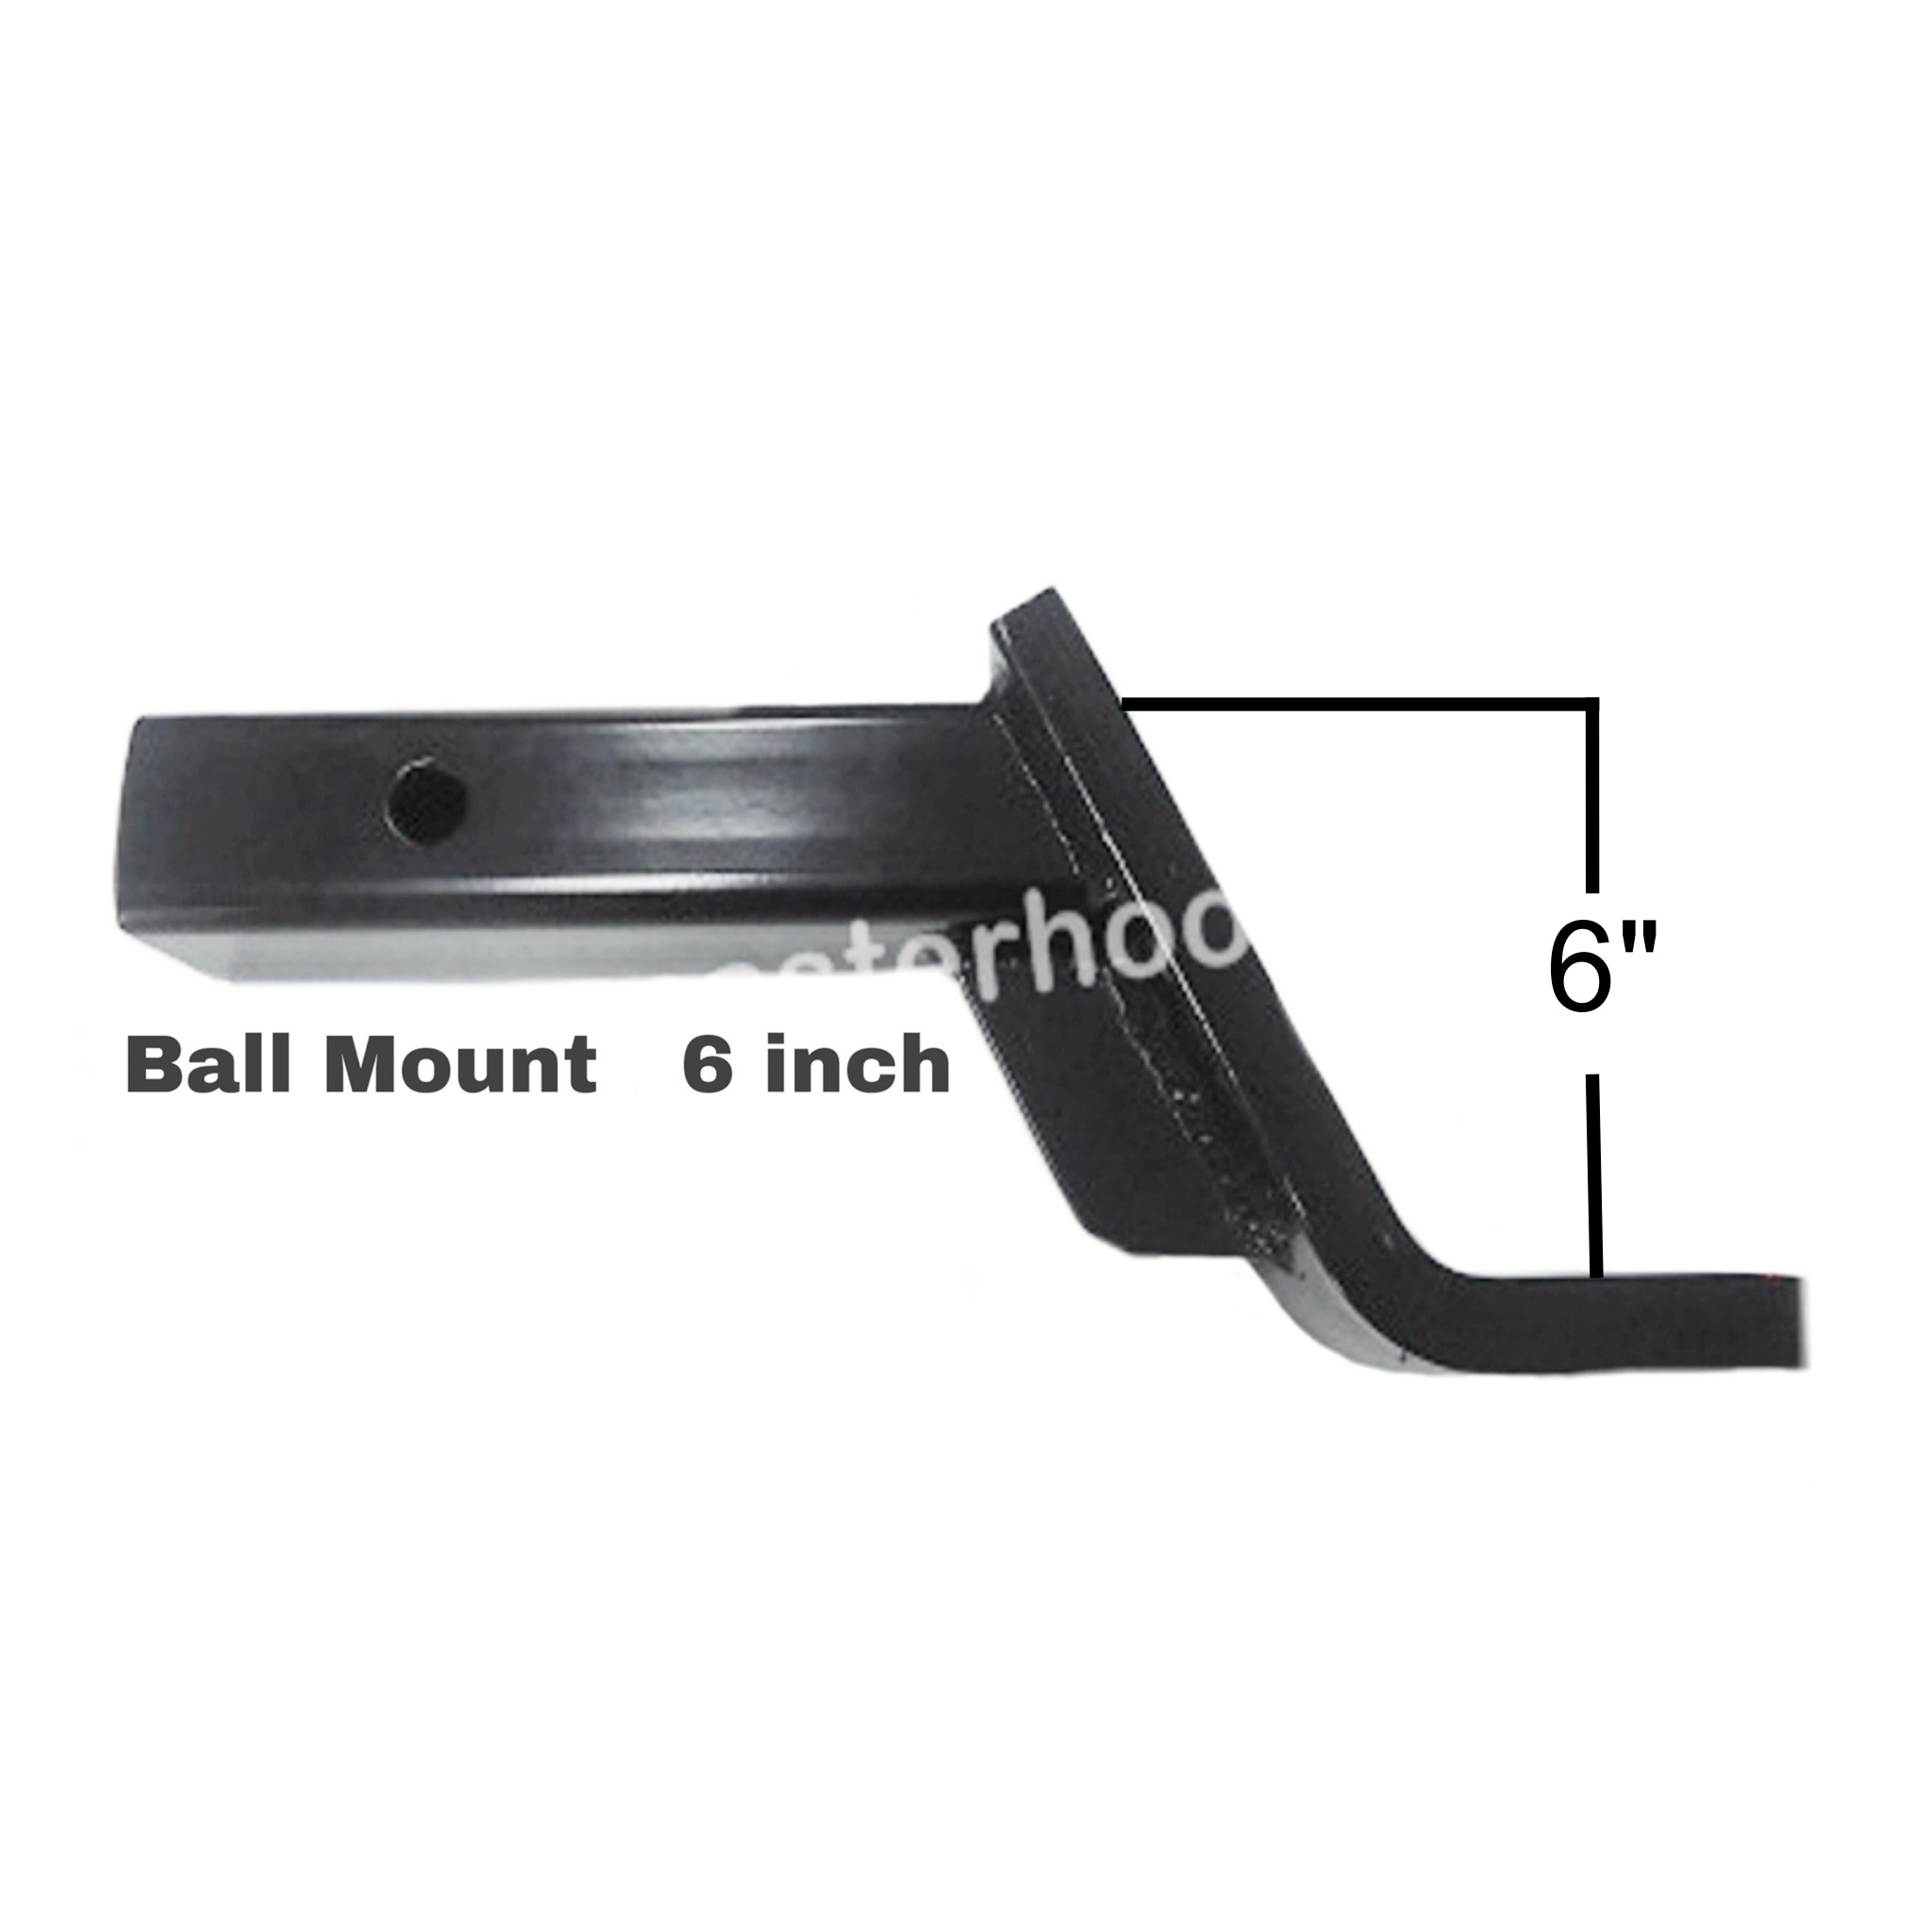 Ball Mount  6 inch